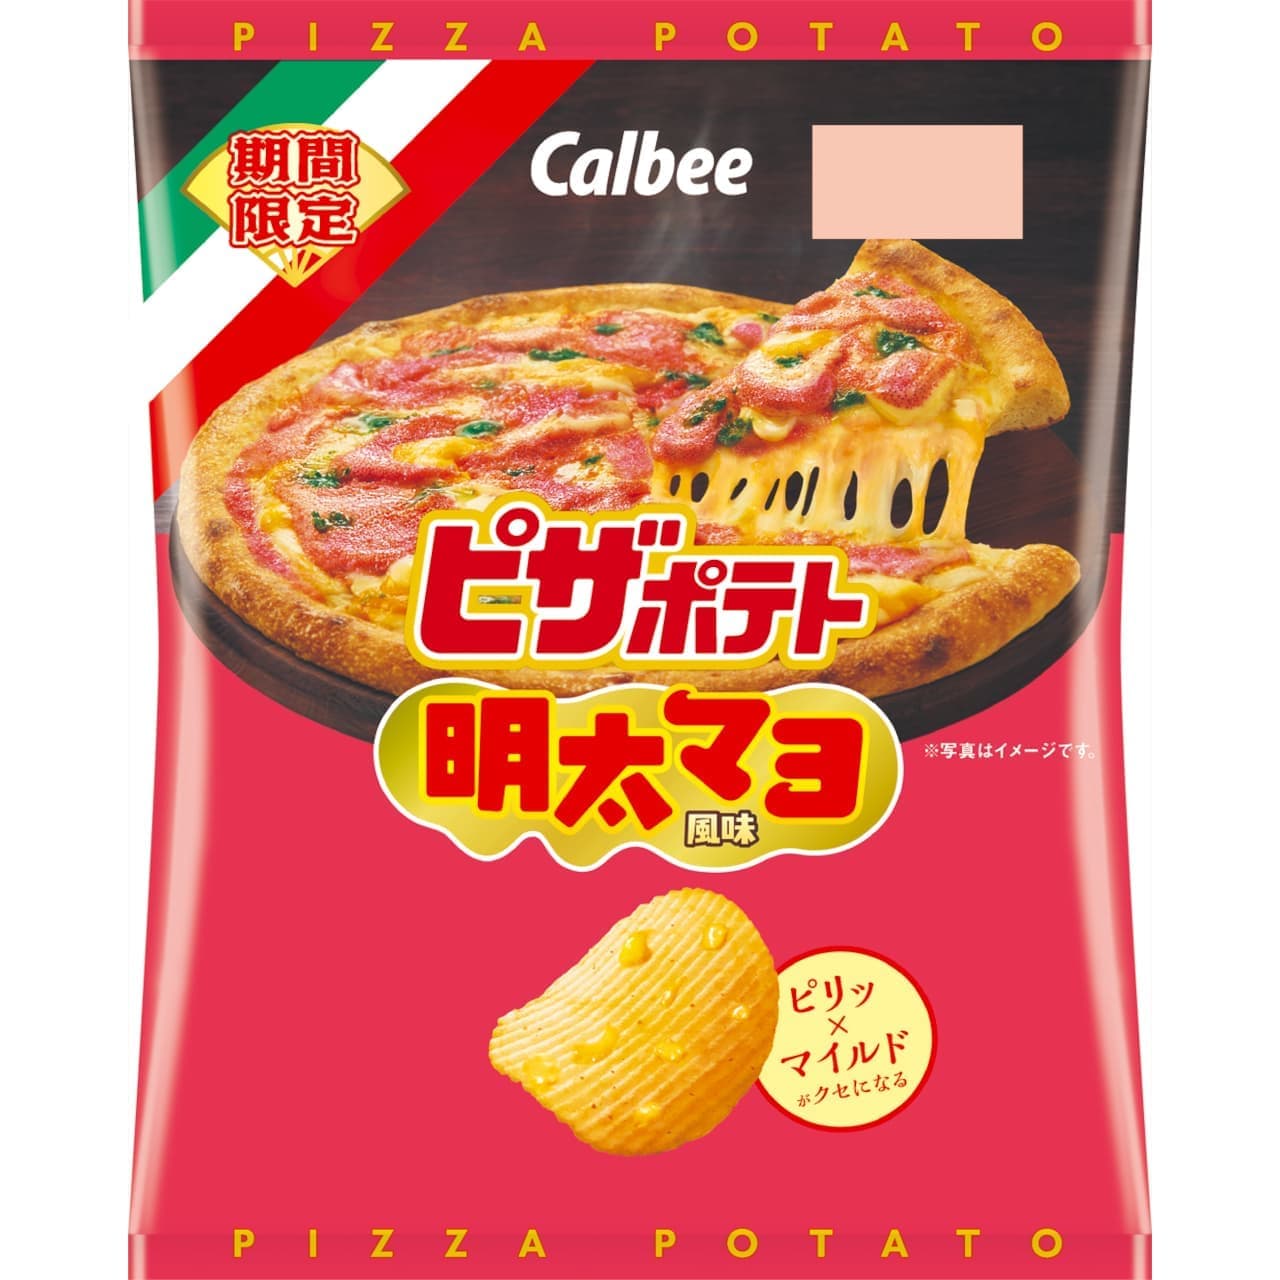 Calbee "Pizza Potato with Meida Mayo Flavor